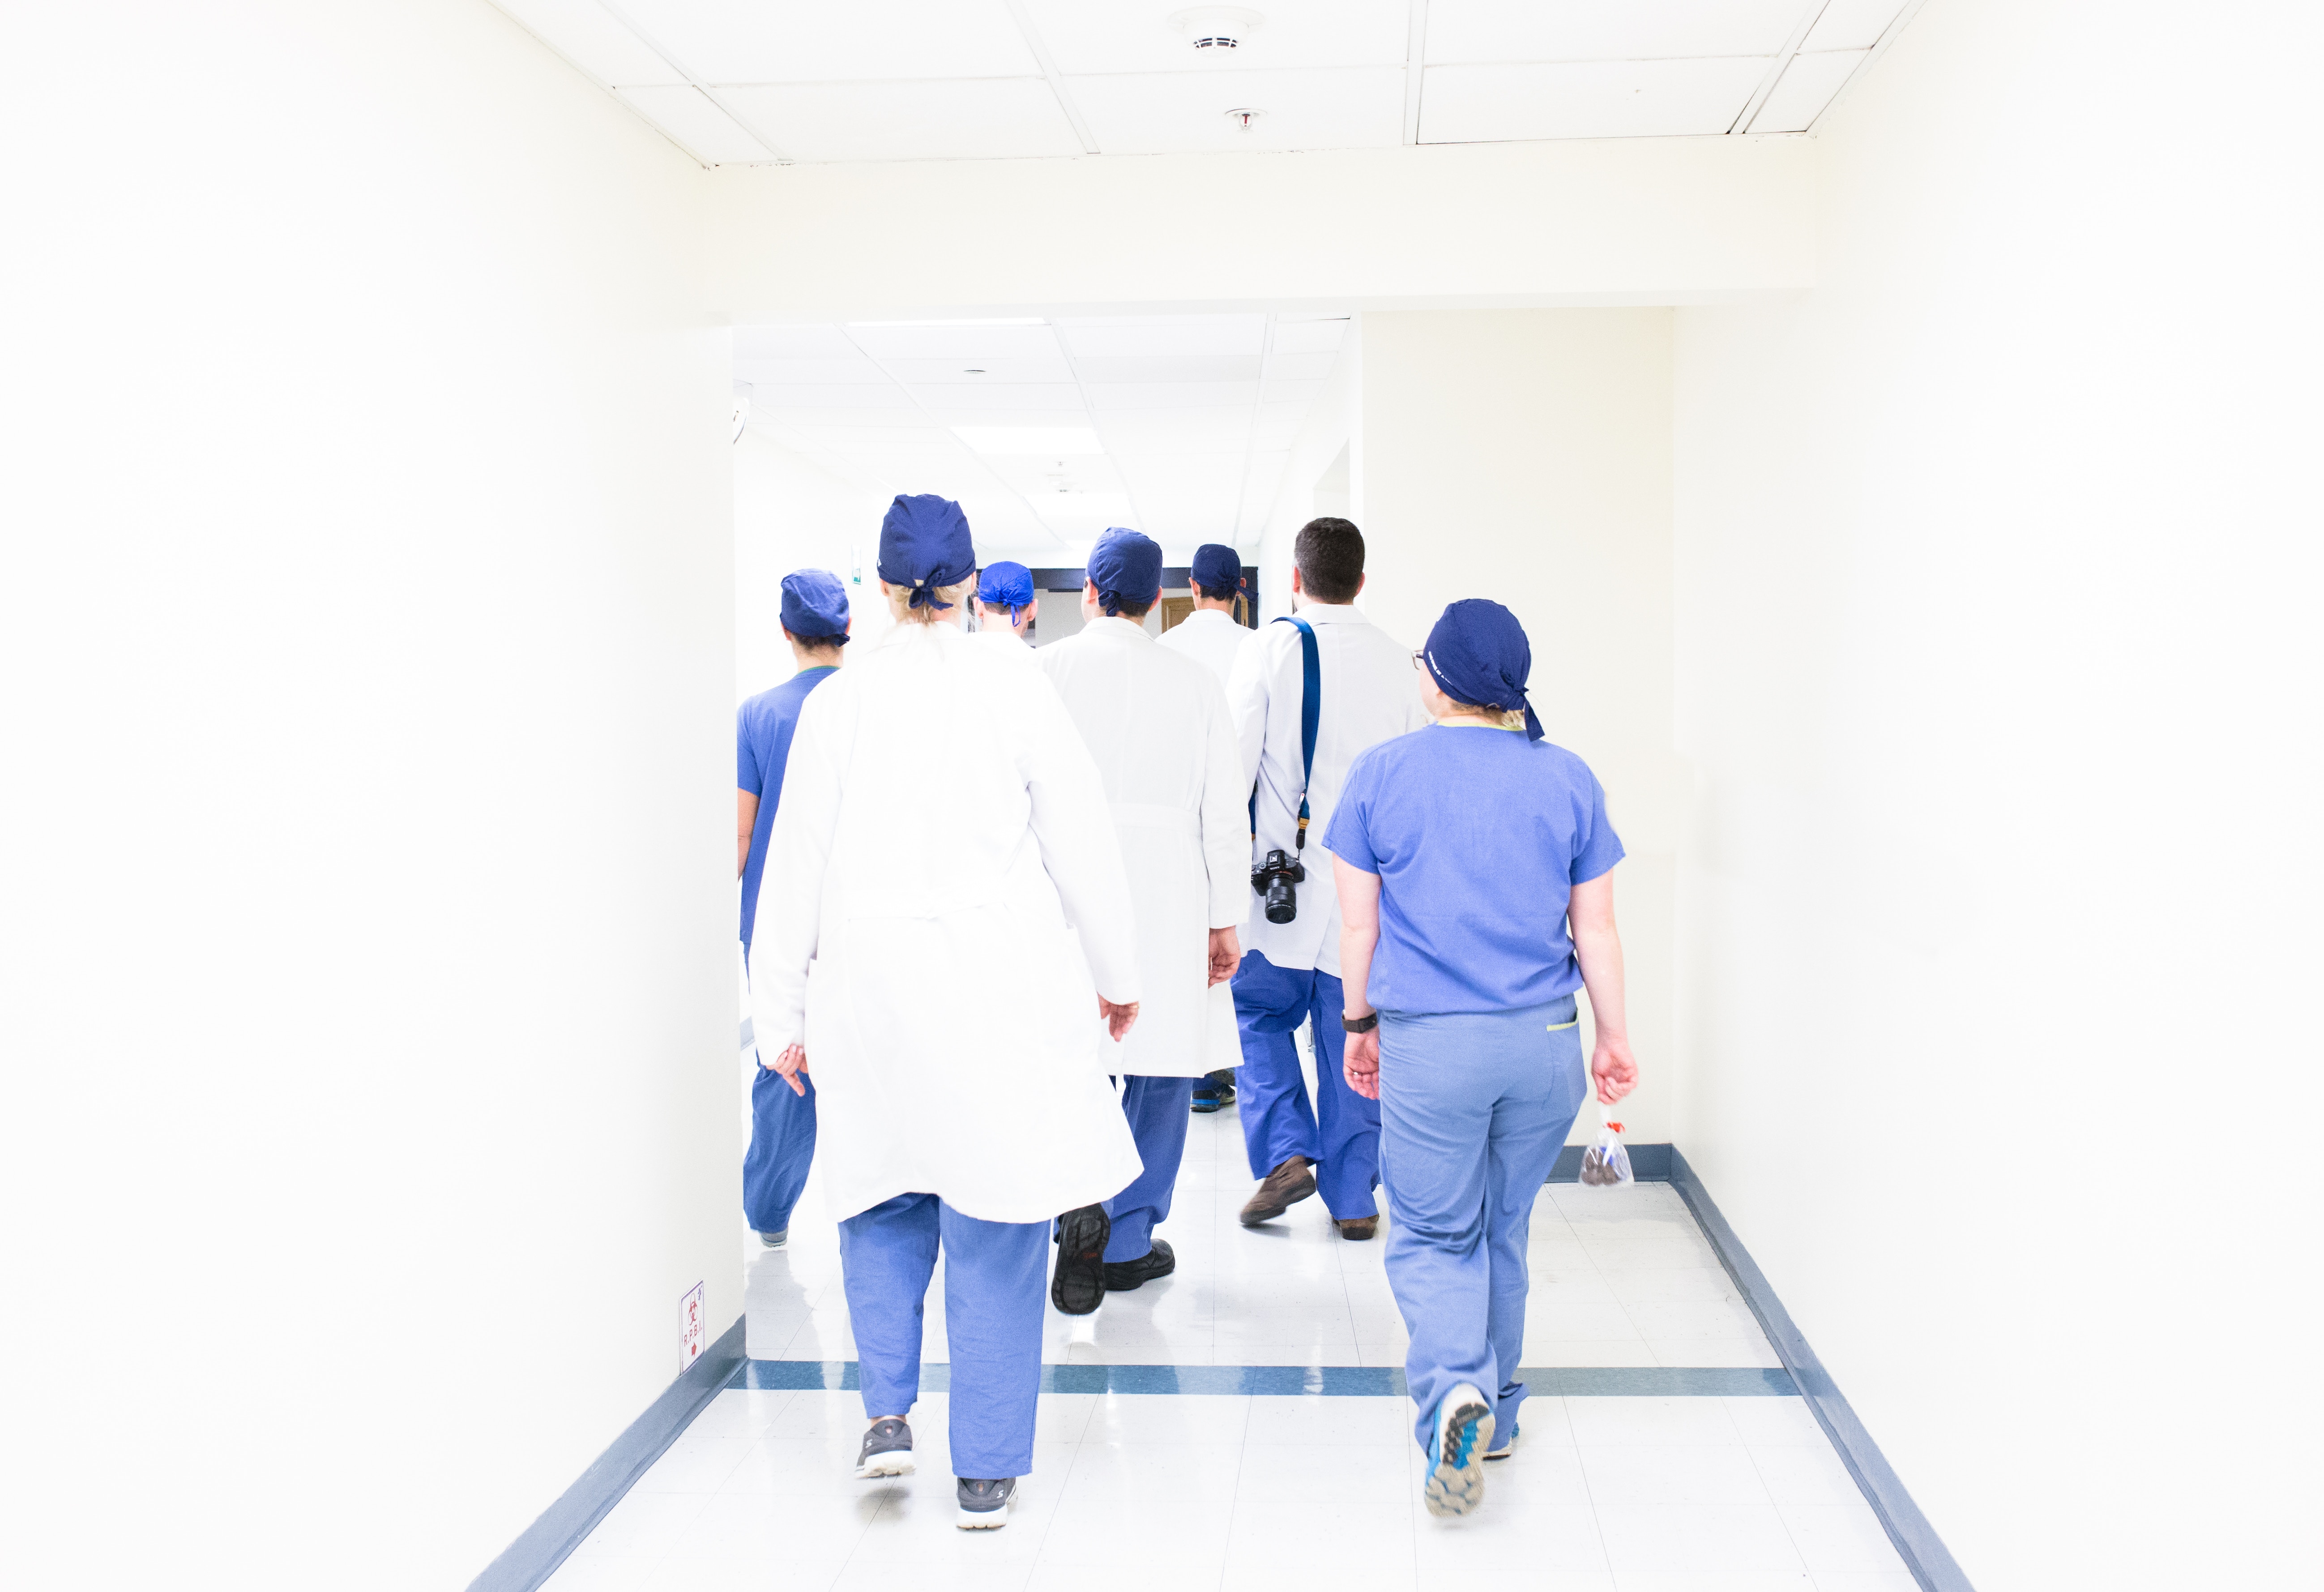 Doctors walking down a hospital hallway